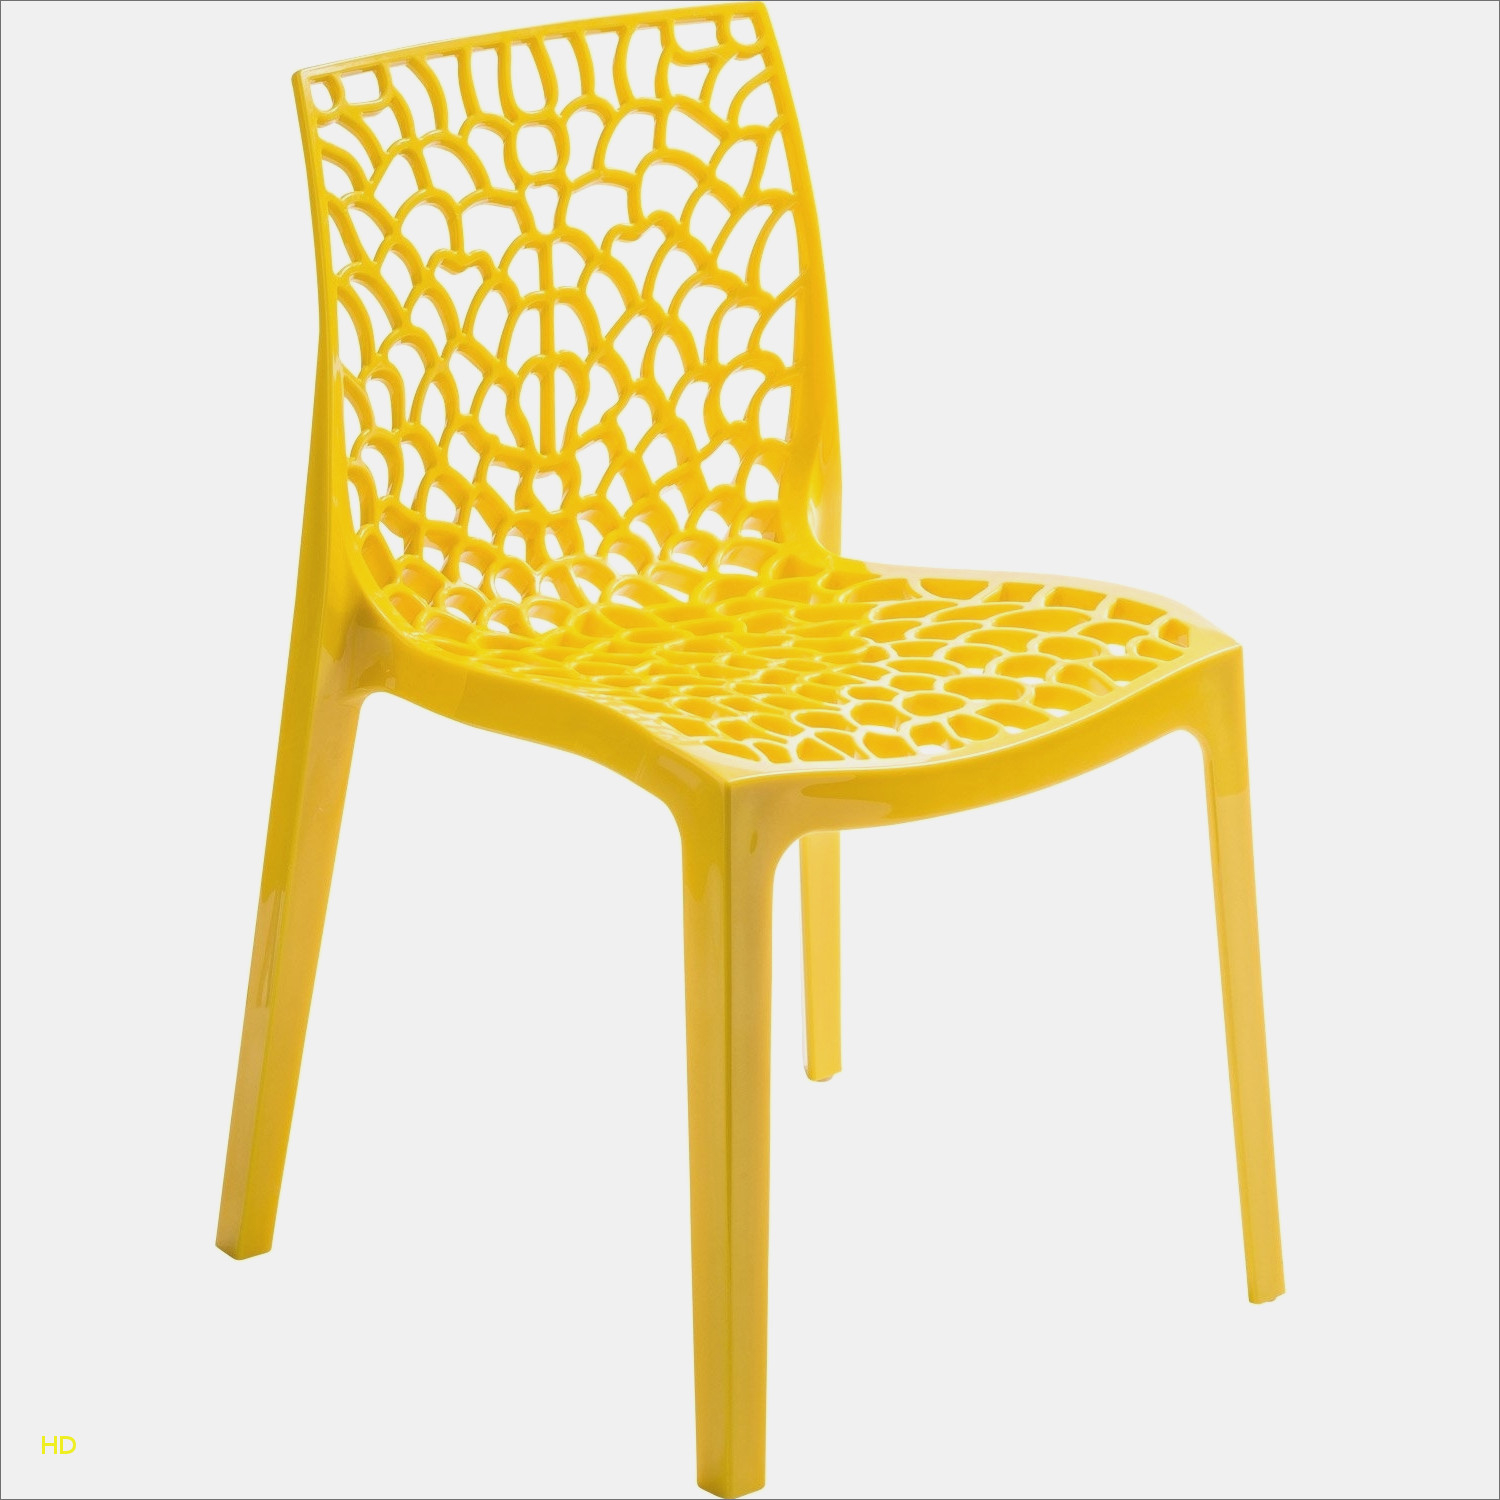 nouveau leroy merlin chaise interior design ideasleroy de jardin leroy merlin chaise inspirant chaises plastique jardin of